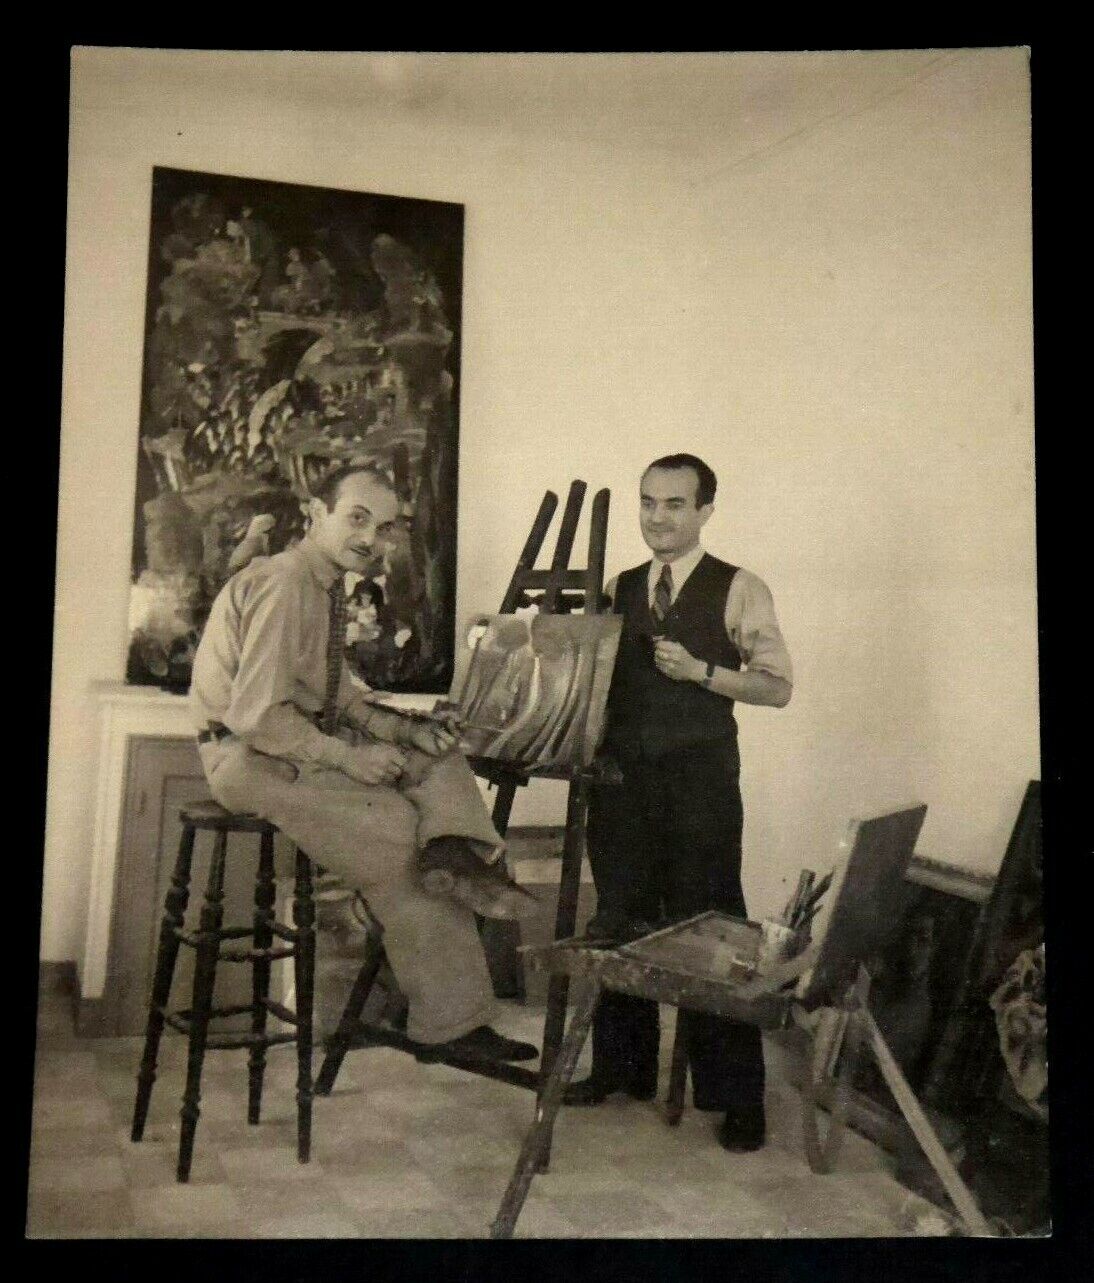 MOLNÉ Luis and HIS BROTHER VIDAL Ignace - ORIGINAL PHOTOGRAPH, 1941